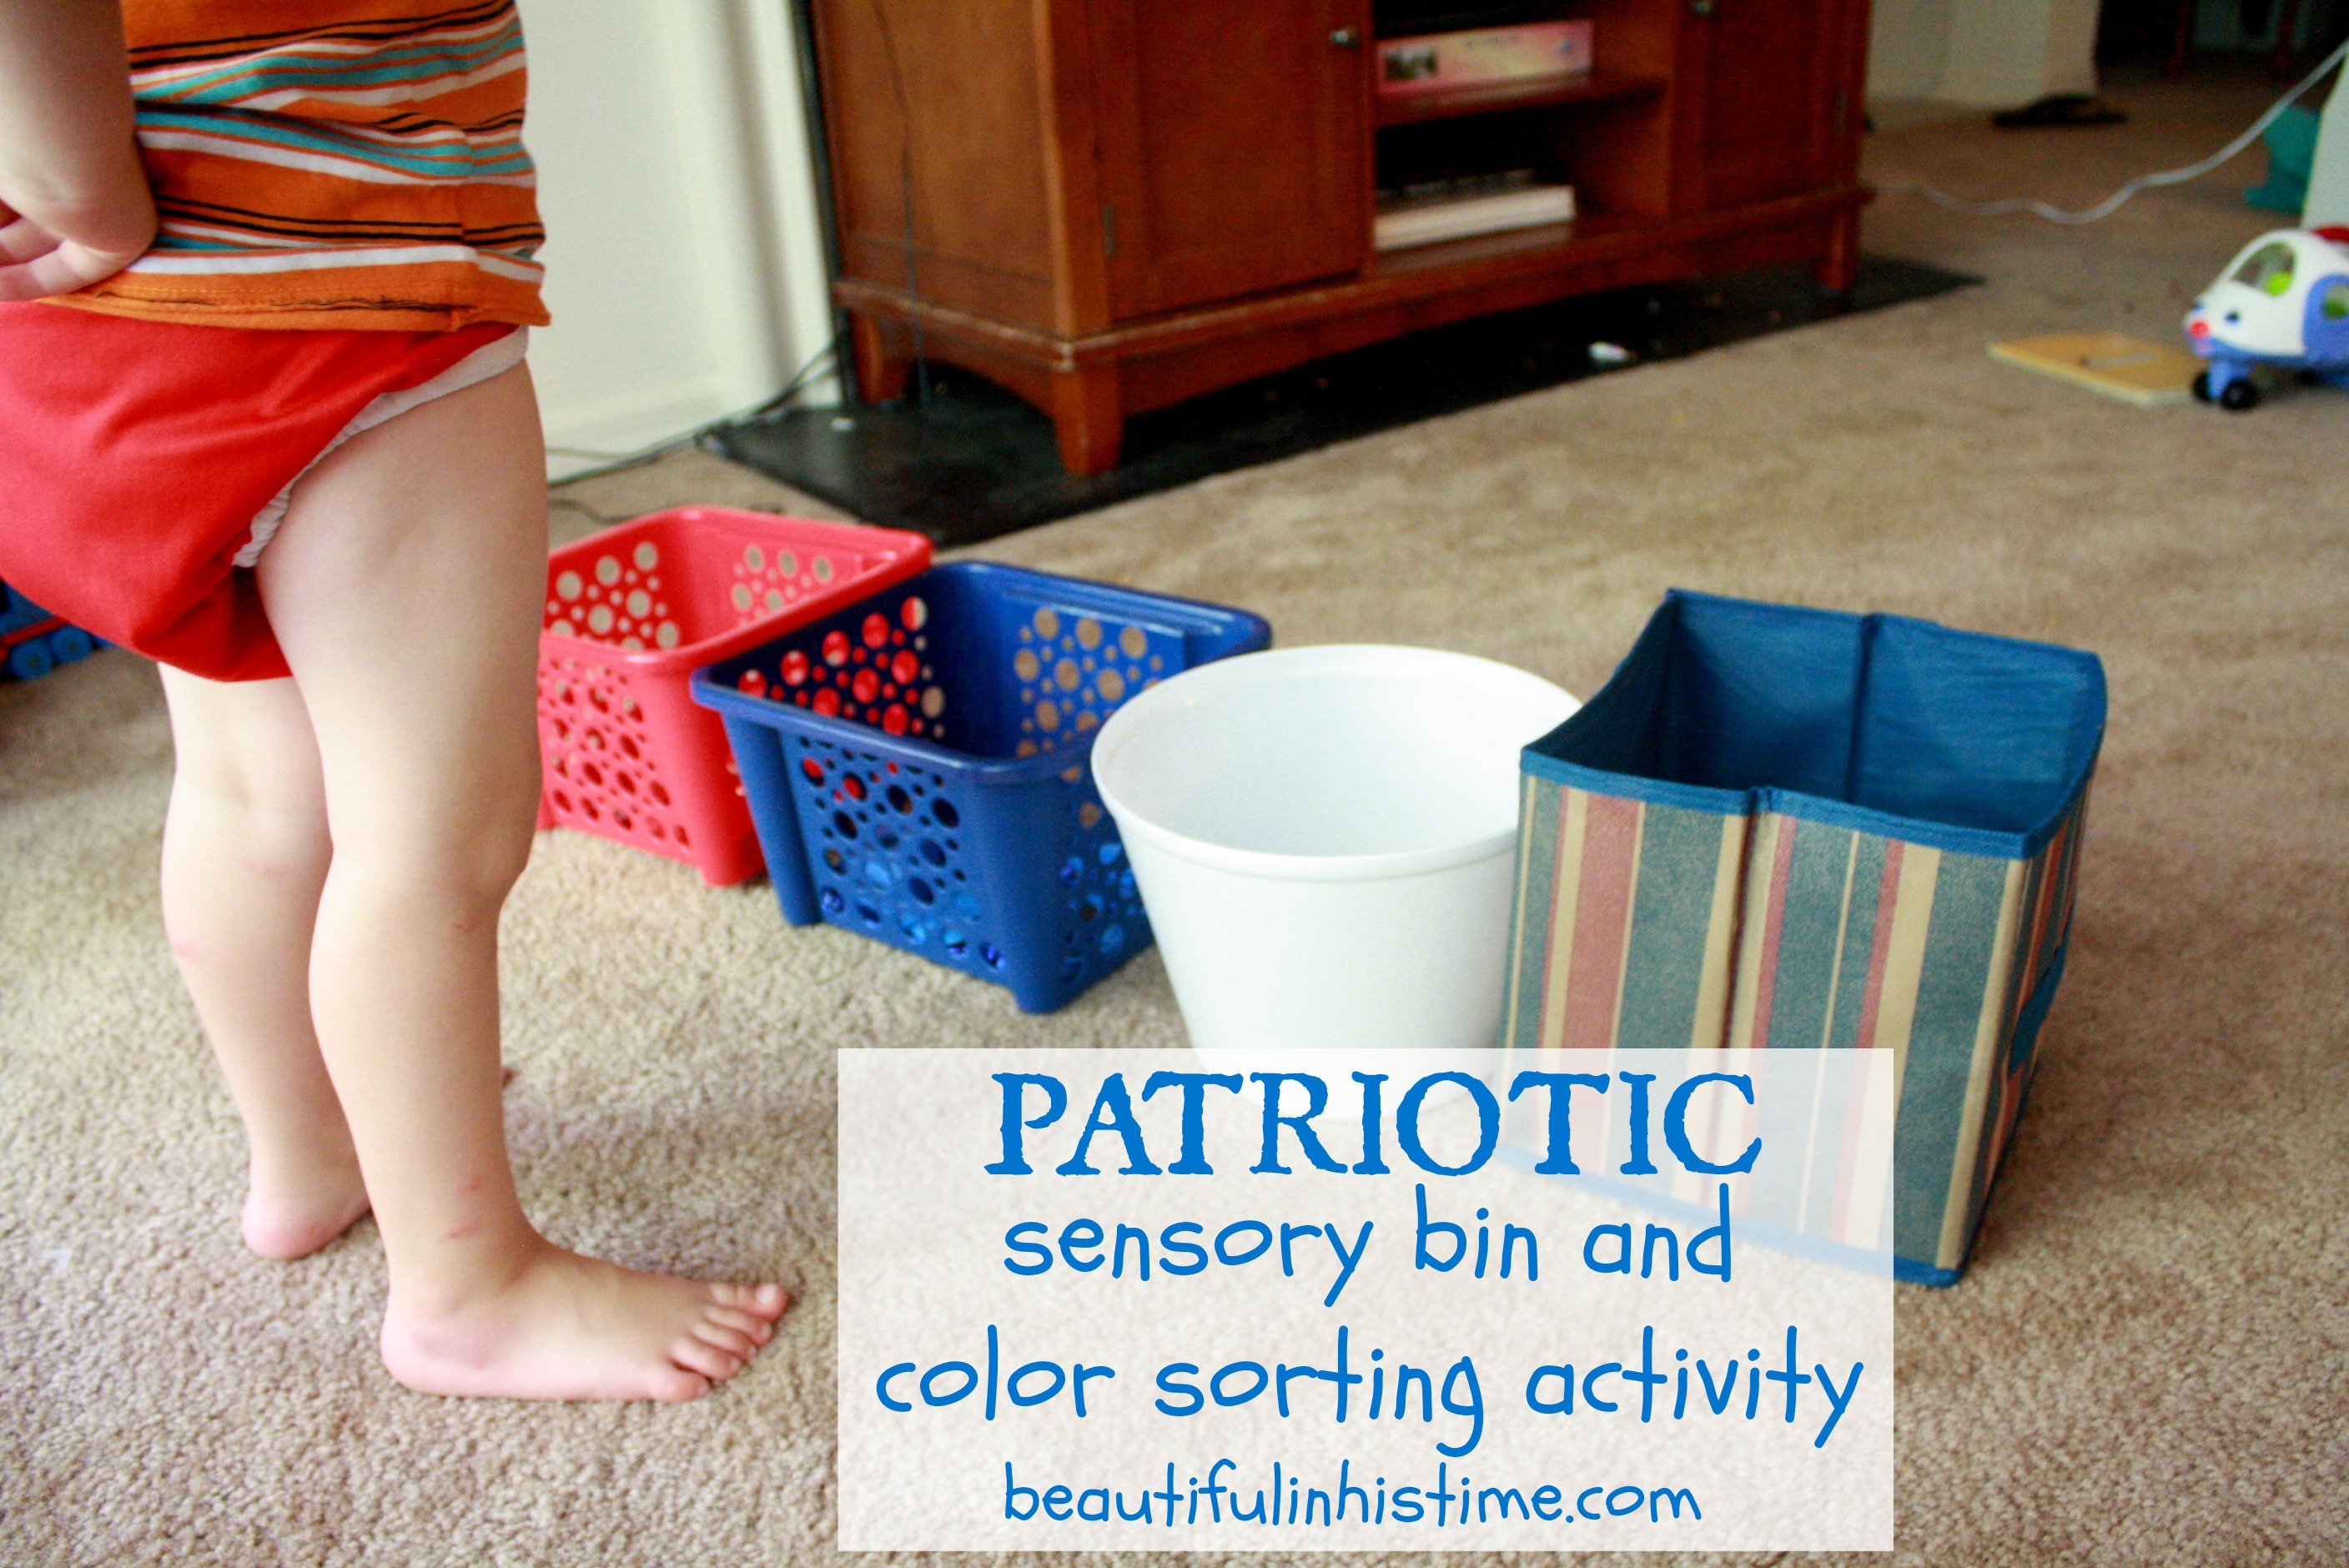 #patriotic 4th of July sensory bin and color sorting activity @beautifulinhistime.com #sensorybin #preschool #homeschool